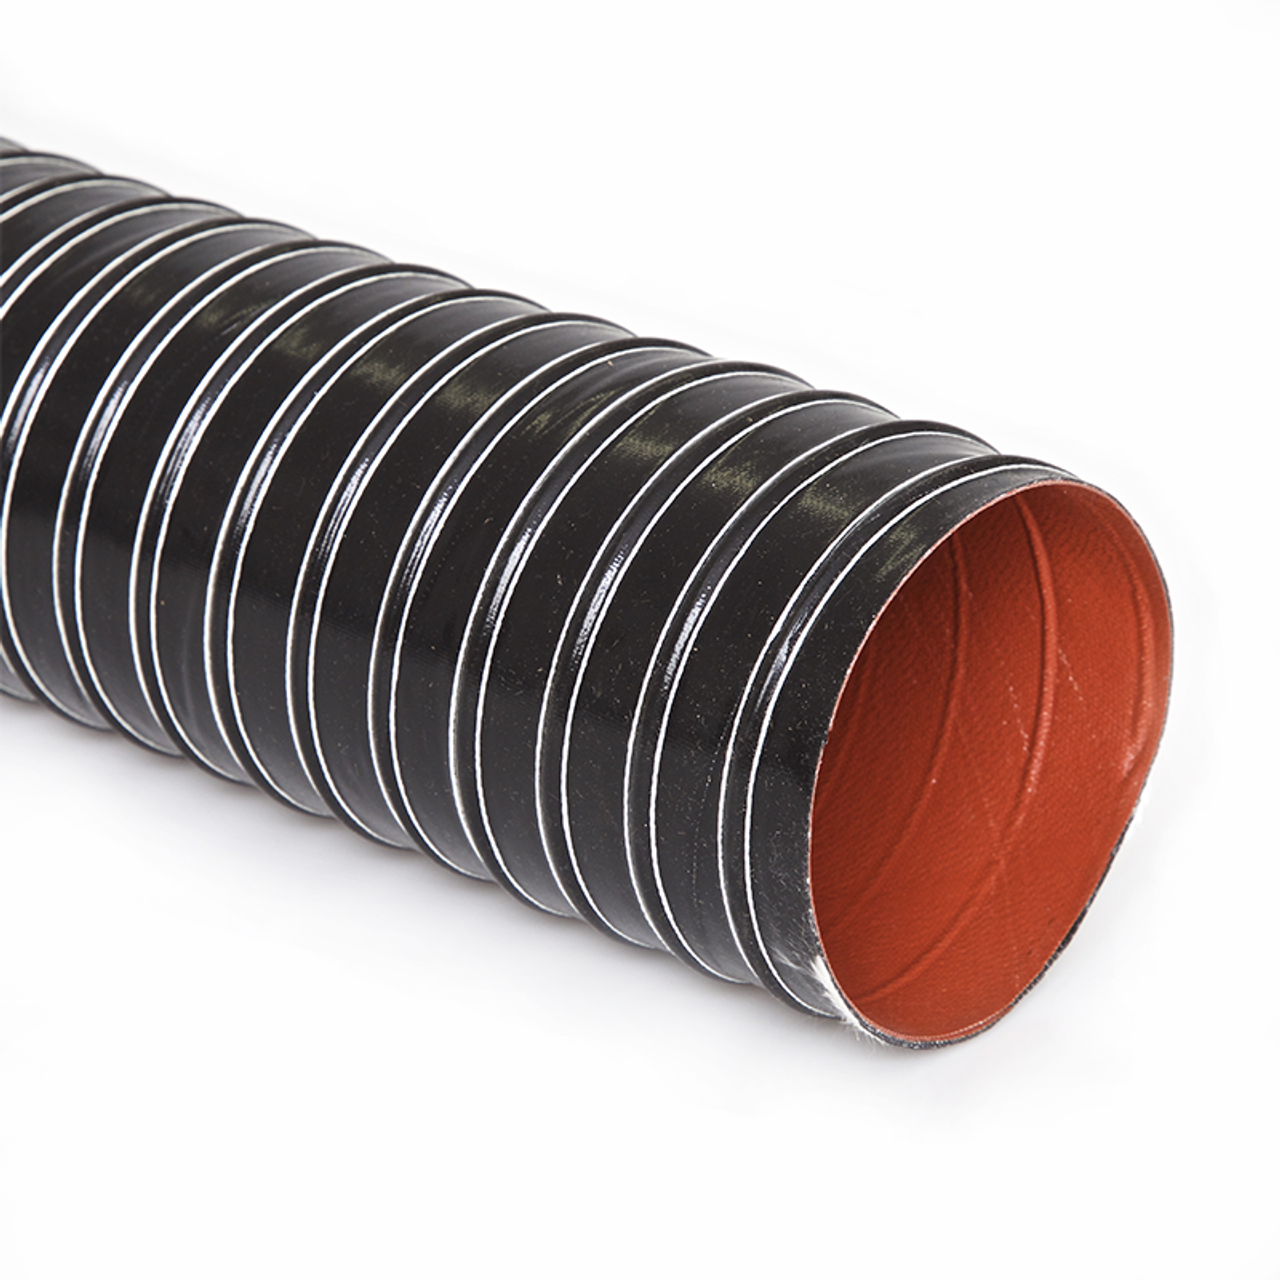 Ø1mm-Ø25mm silicone fiberglass 200°C high temperature hose insulated hoses